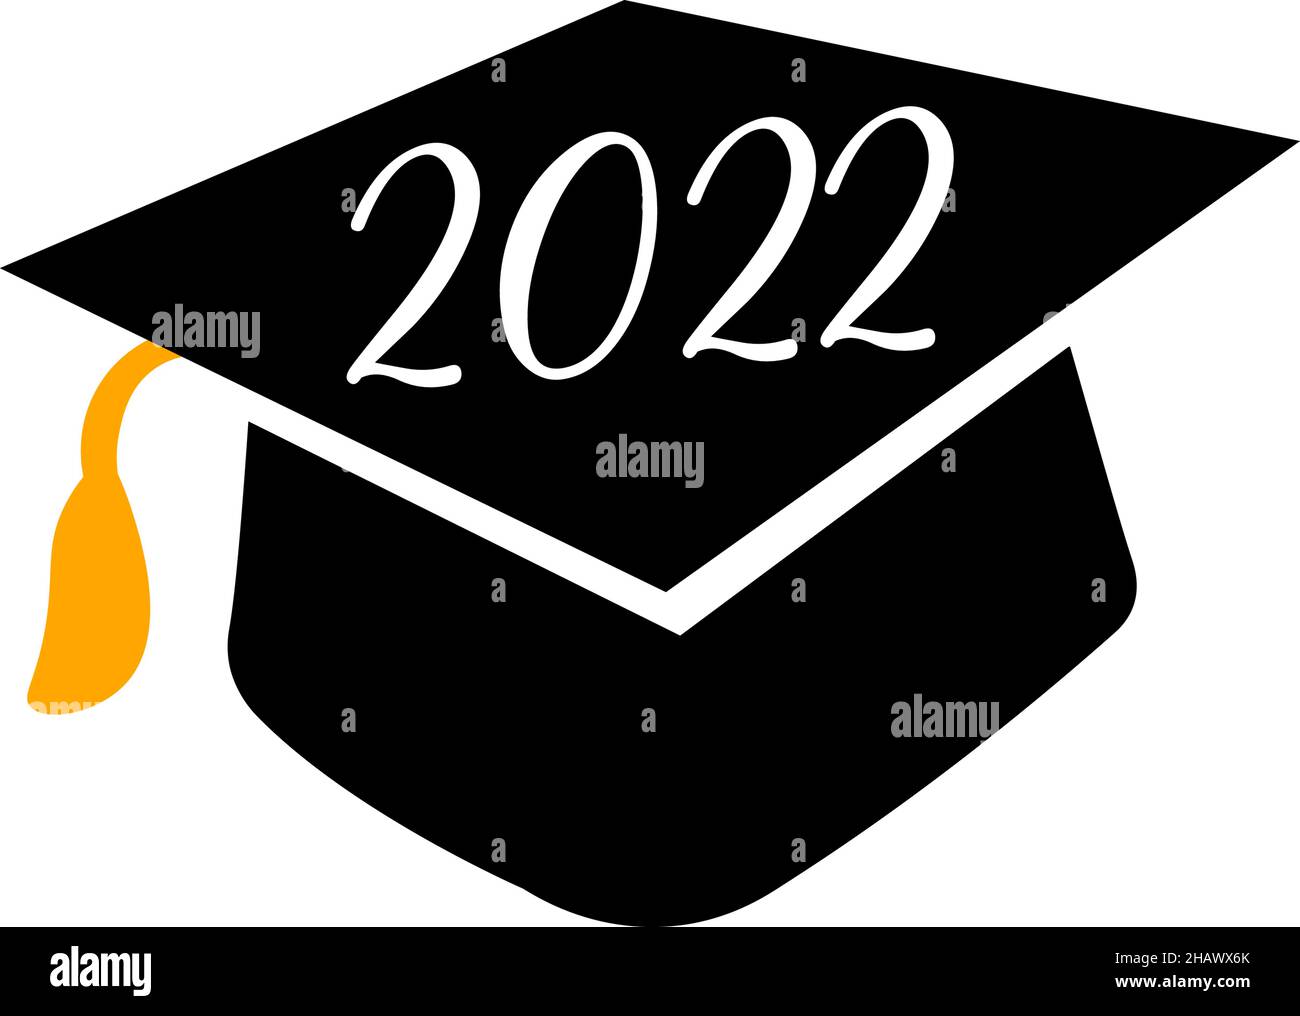 Graduation cap 2022 vector icon. Square academic cap. silhouette black Stock Vector